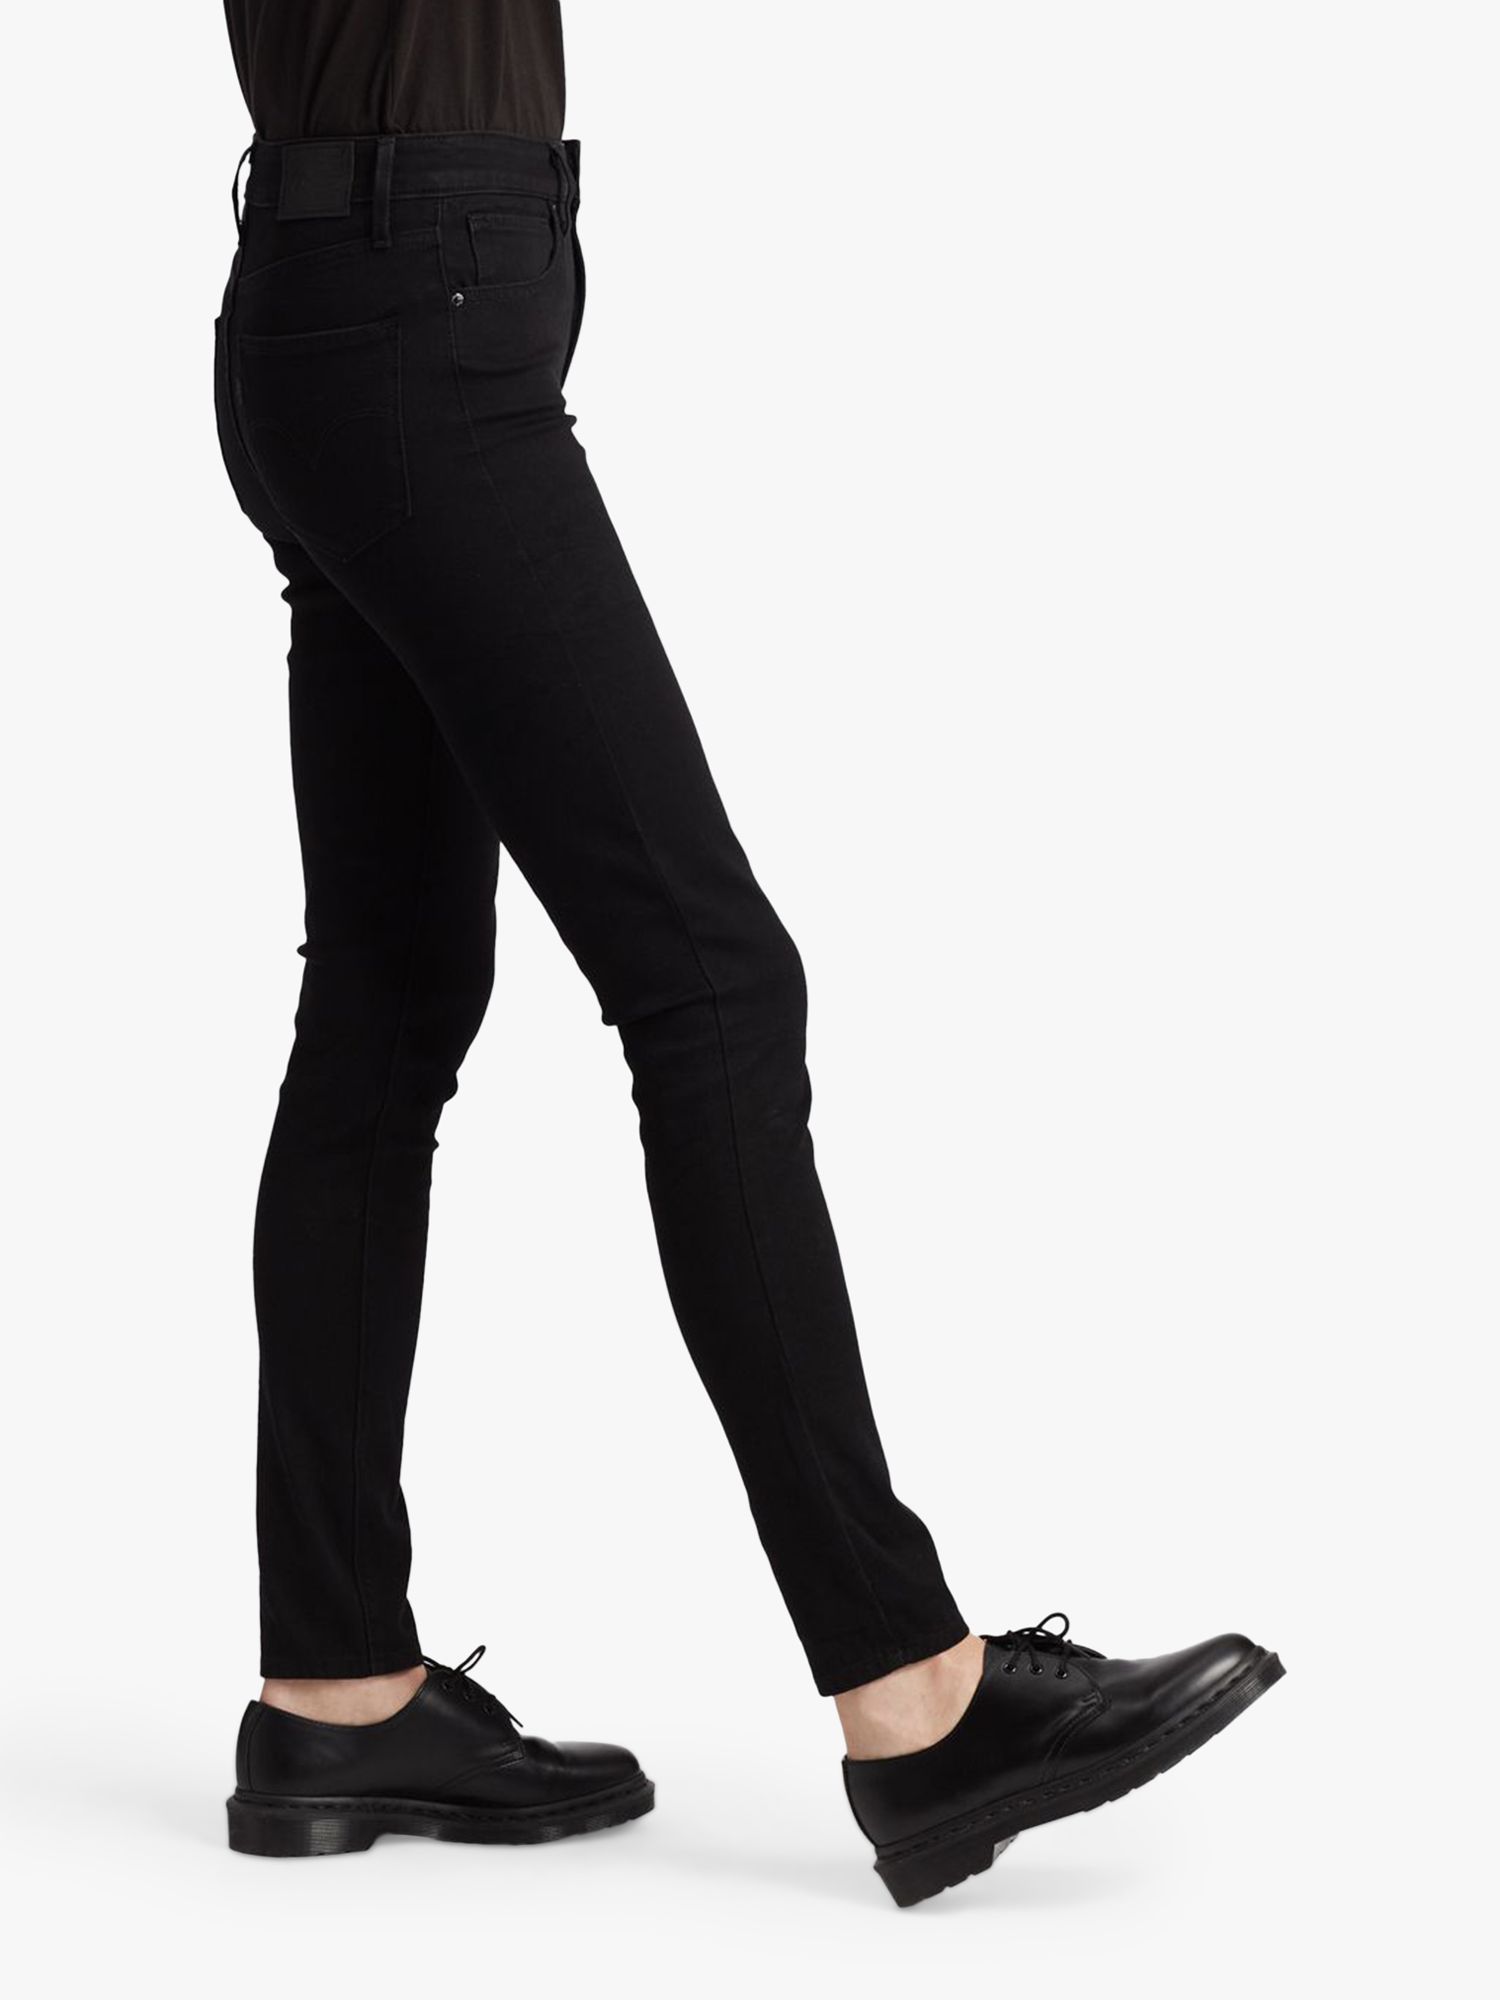 Buy Levi's 721 High Rise Skinny Jeans, Long Shot Black Online at johnlewis.com